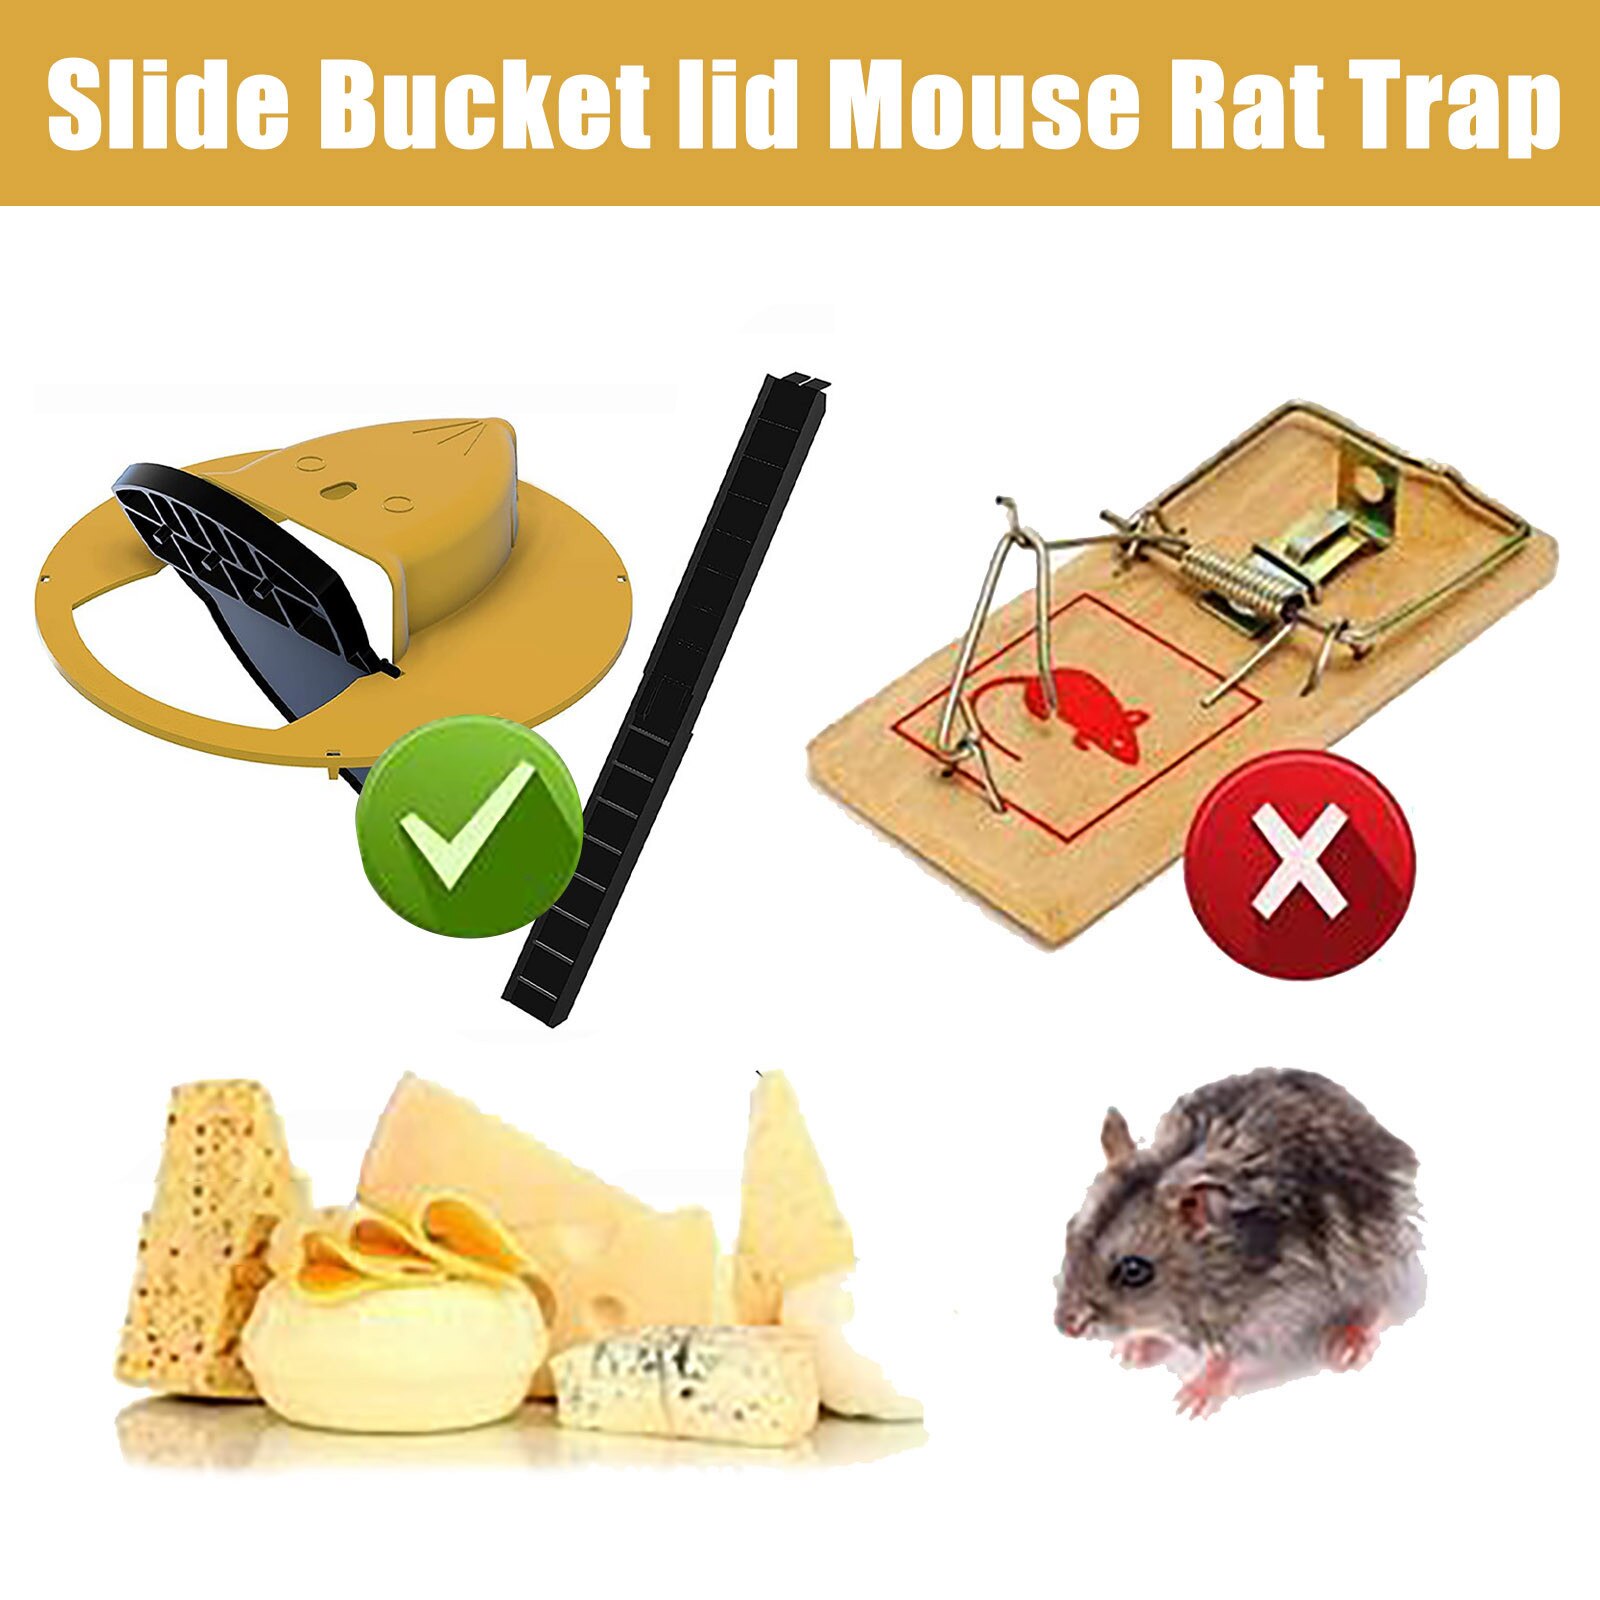 https://bti-tool.com/images/detailed/4/Reusable-Plastic-Smart-Mouse-Trap-Flip-N-Slide-Bucket-Lid-Mouse-Rat-Trap-Mouse-trap-Humane_zbu0-75.jpg